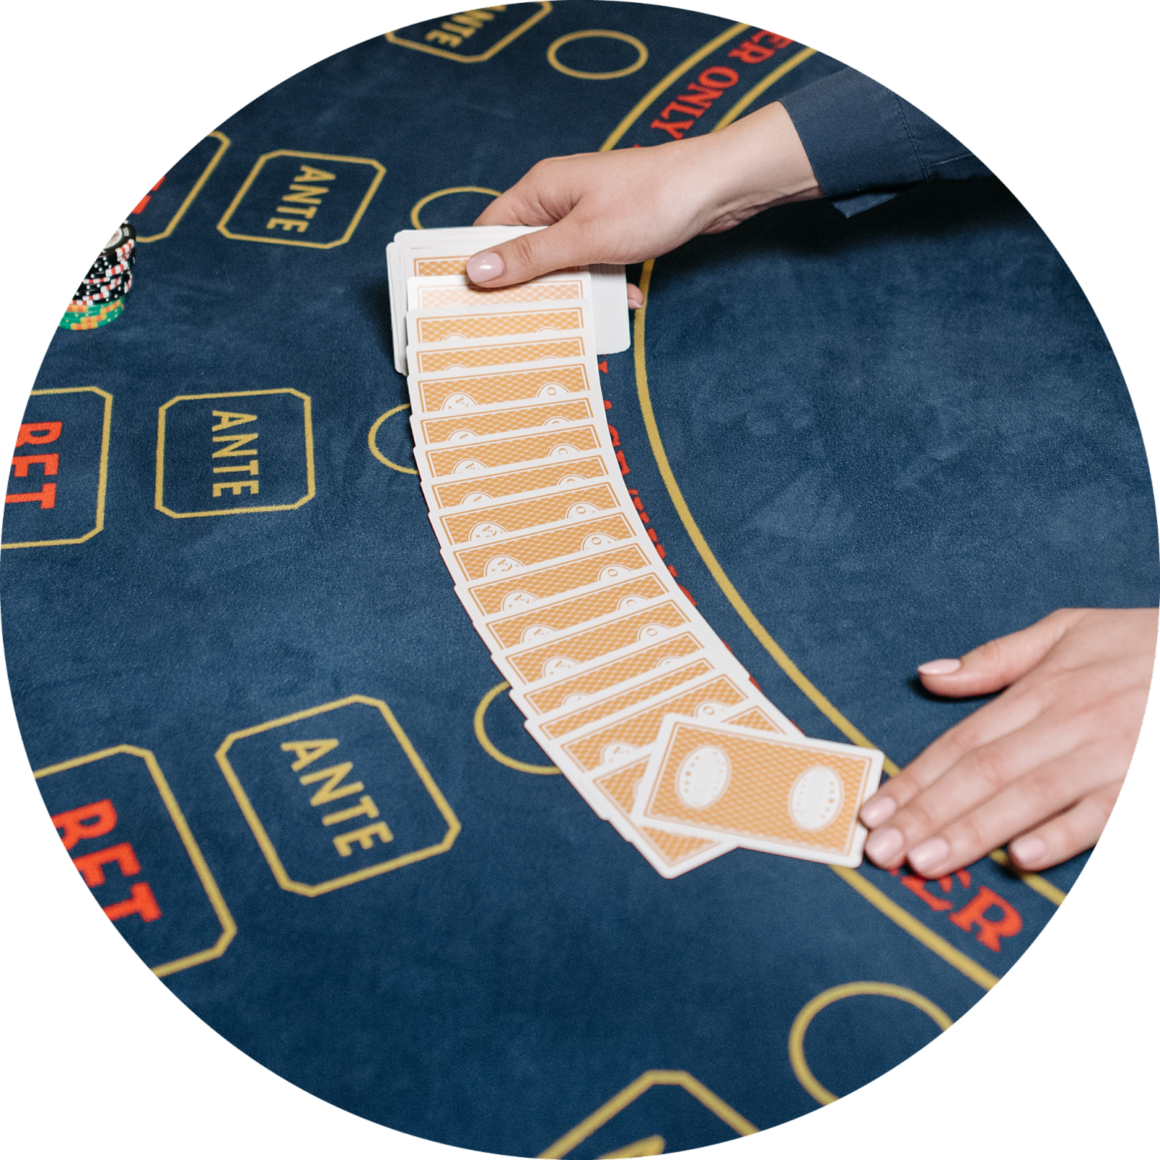 Dealer shuffles cards baccarat table